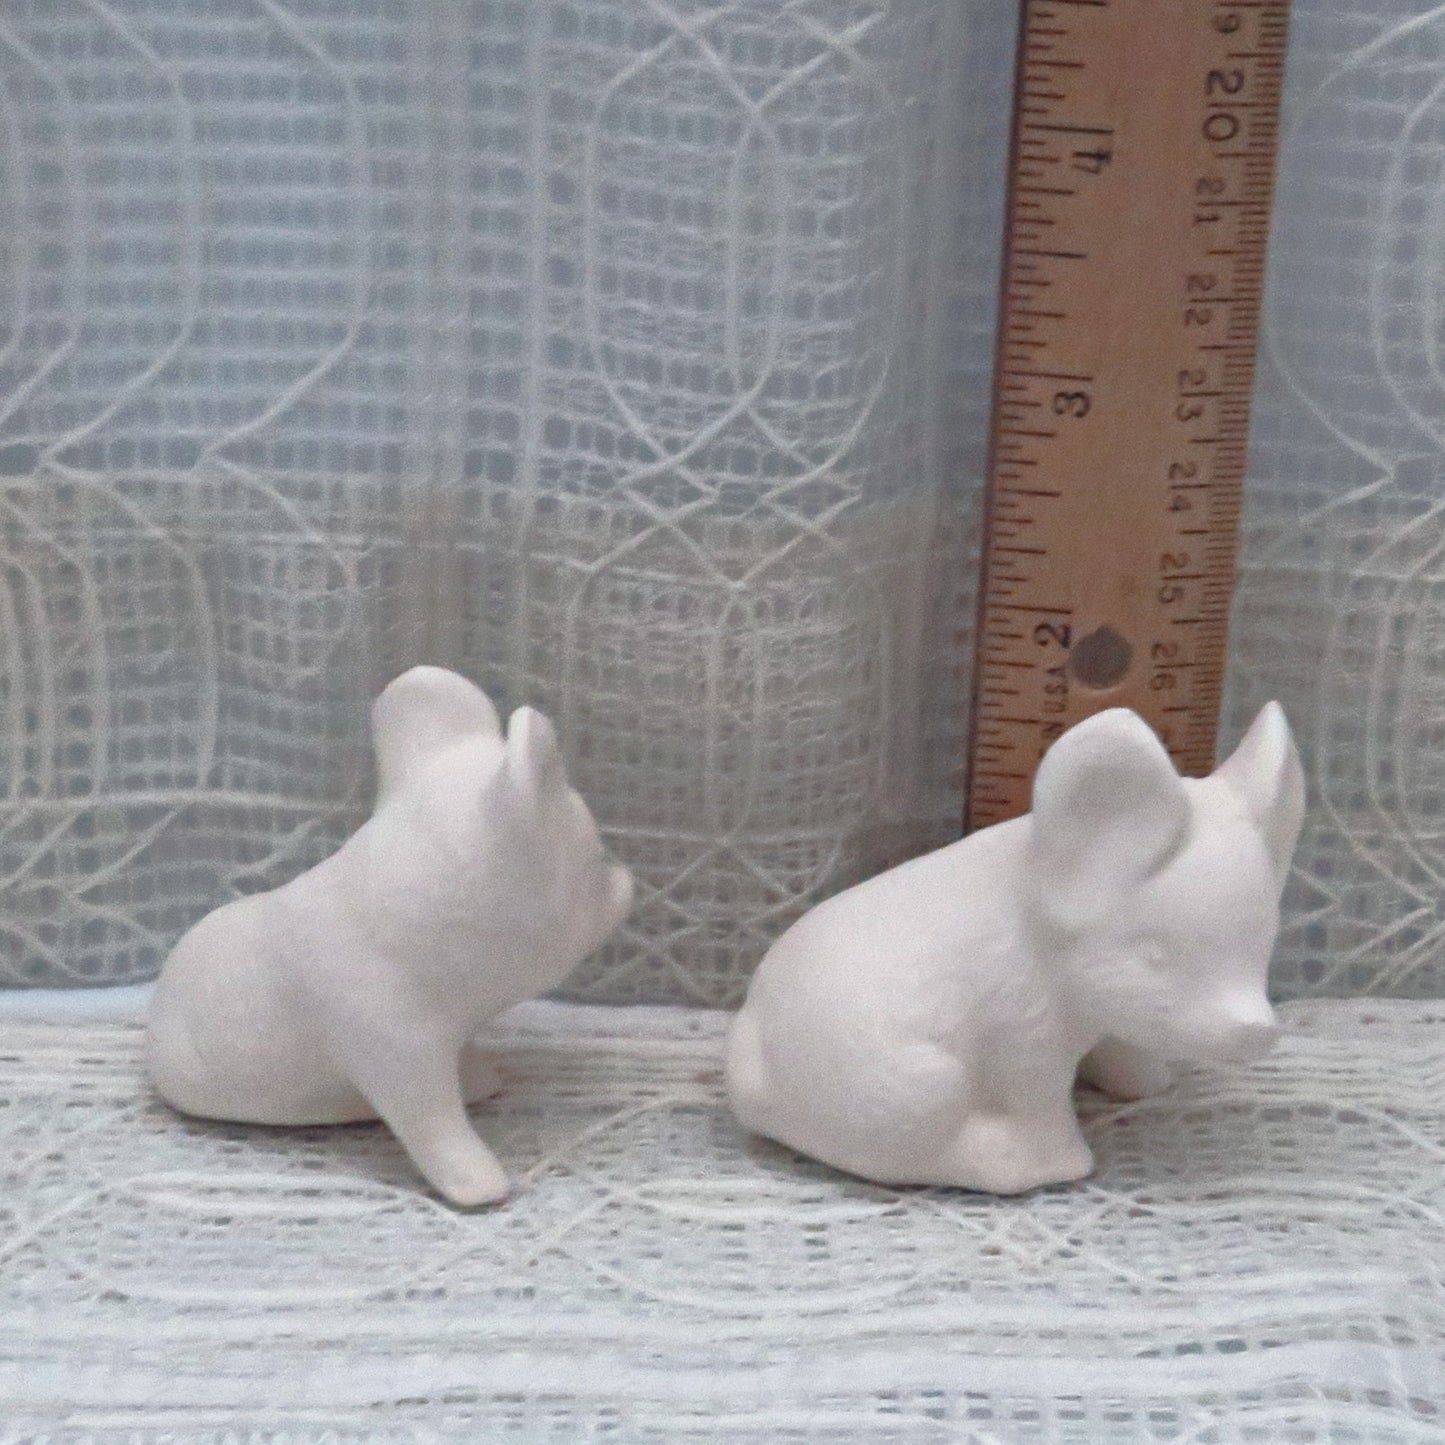 Unpainted Ceramic Bisque Pig Figurines / Pig Statues / Ready to Paint / Ceramics to Paint / Paintable Ceramics / Pig Decor / Pig Lover Gift